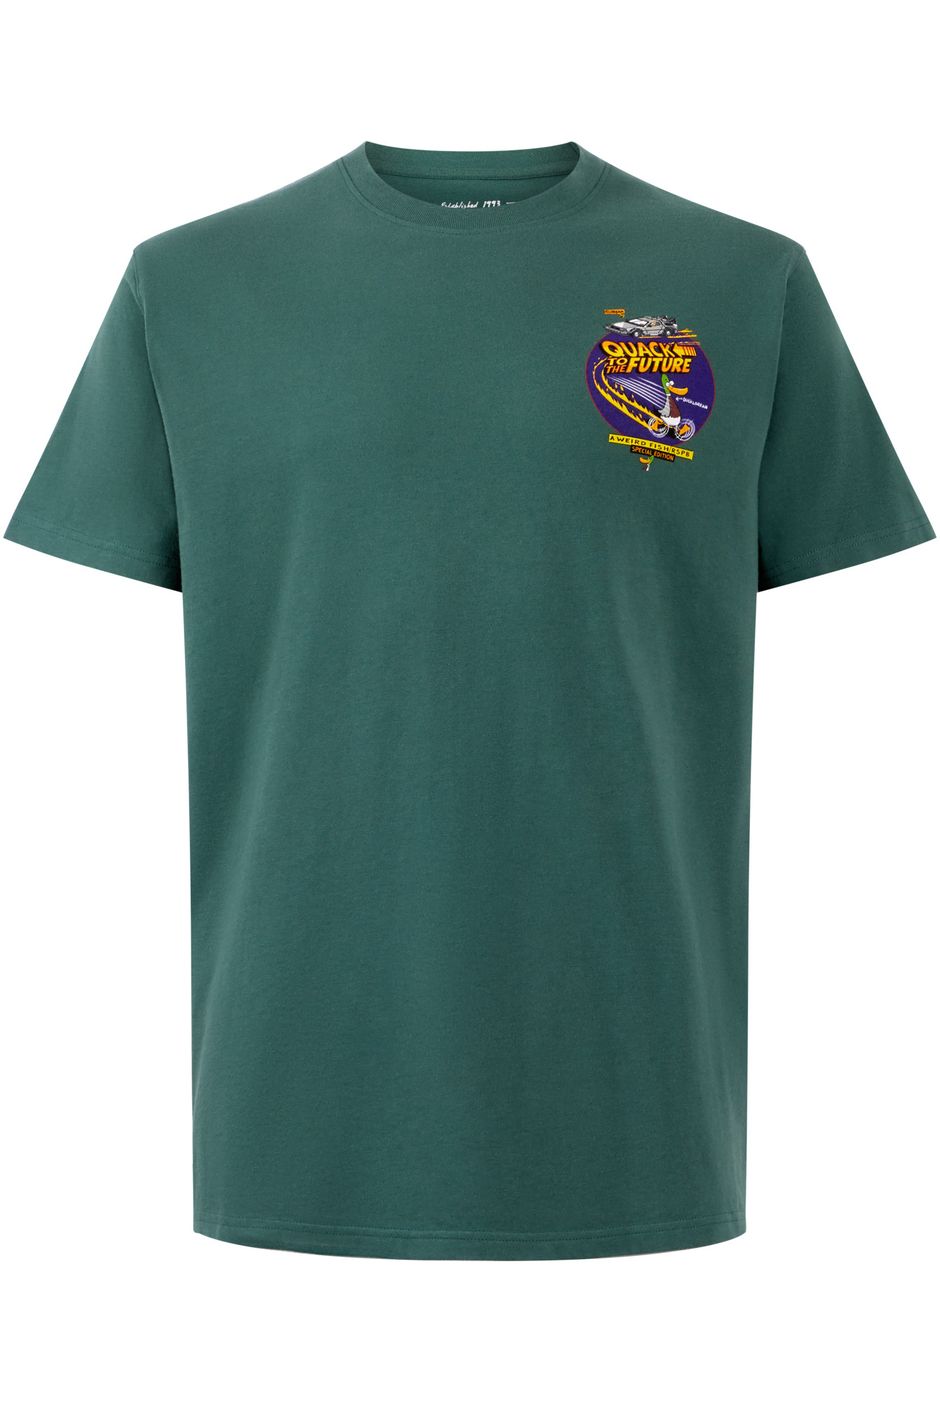 Quack RSPB Artist T-Shirt Dark Green